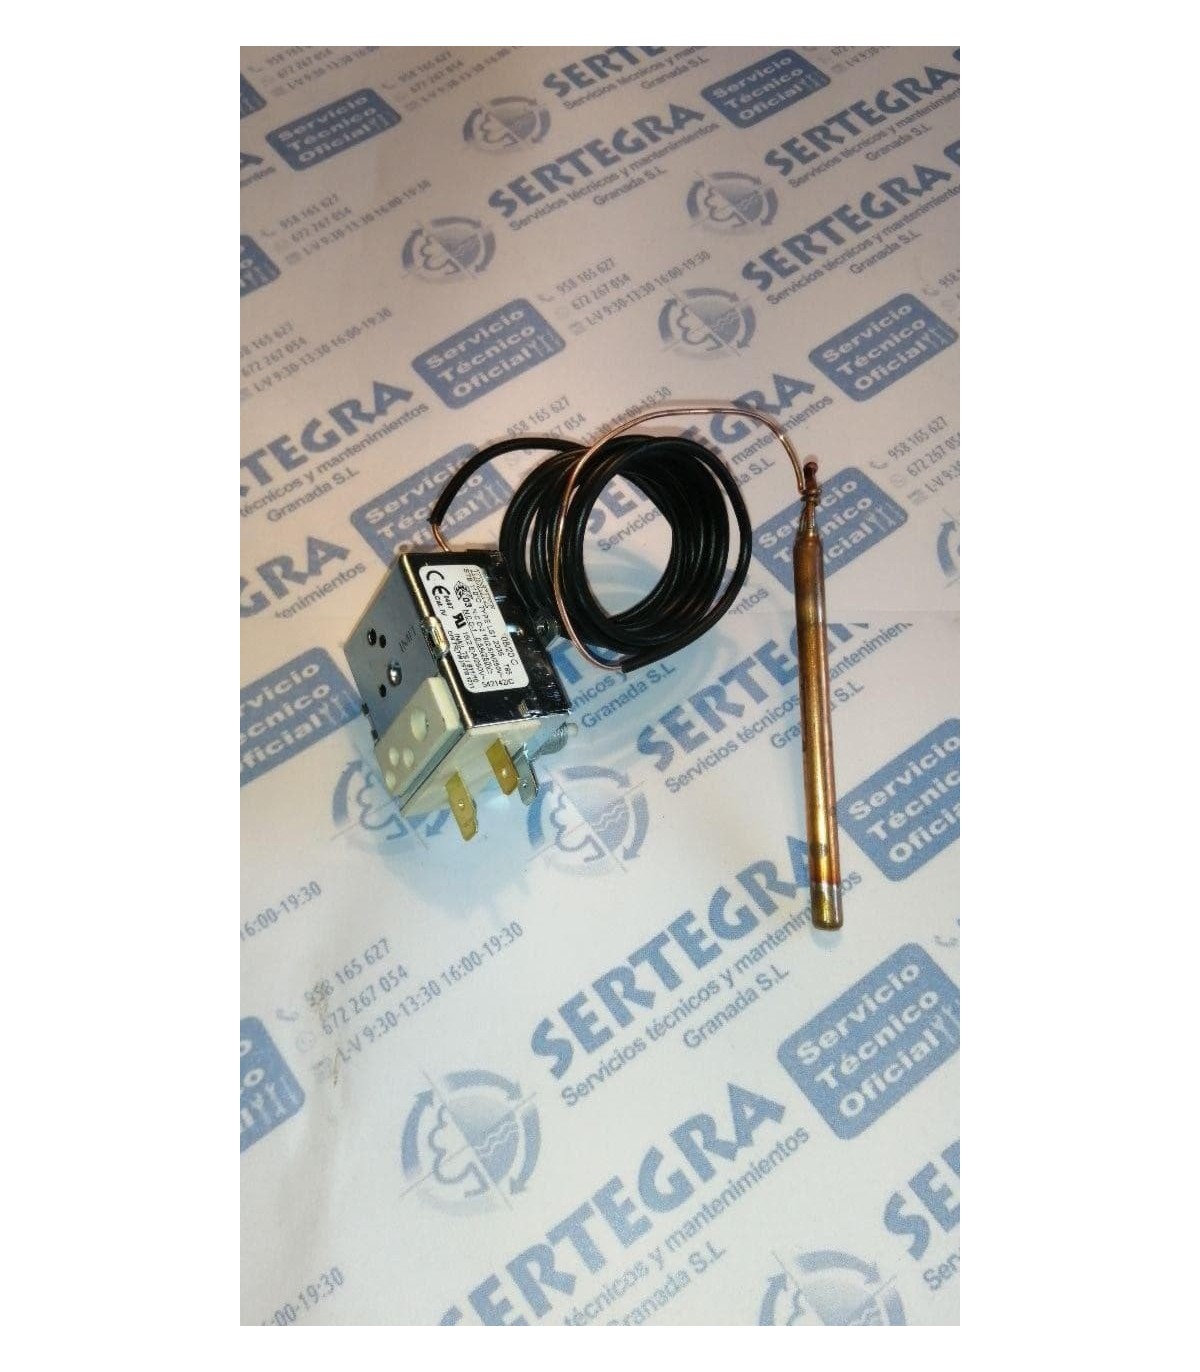 Termostato Seguridad Caldera 90-110¬∫C Standard